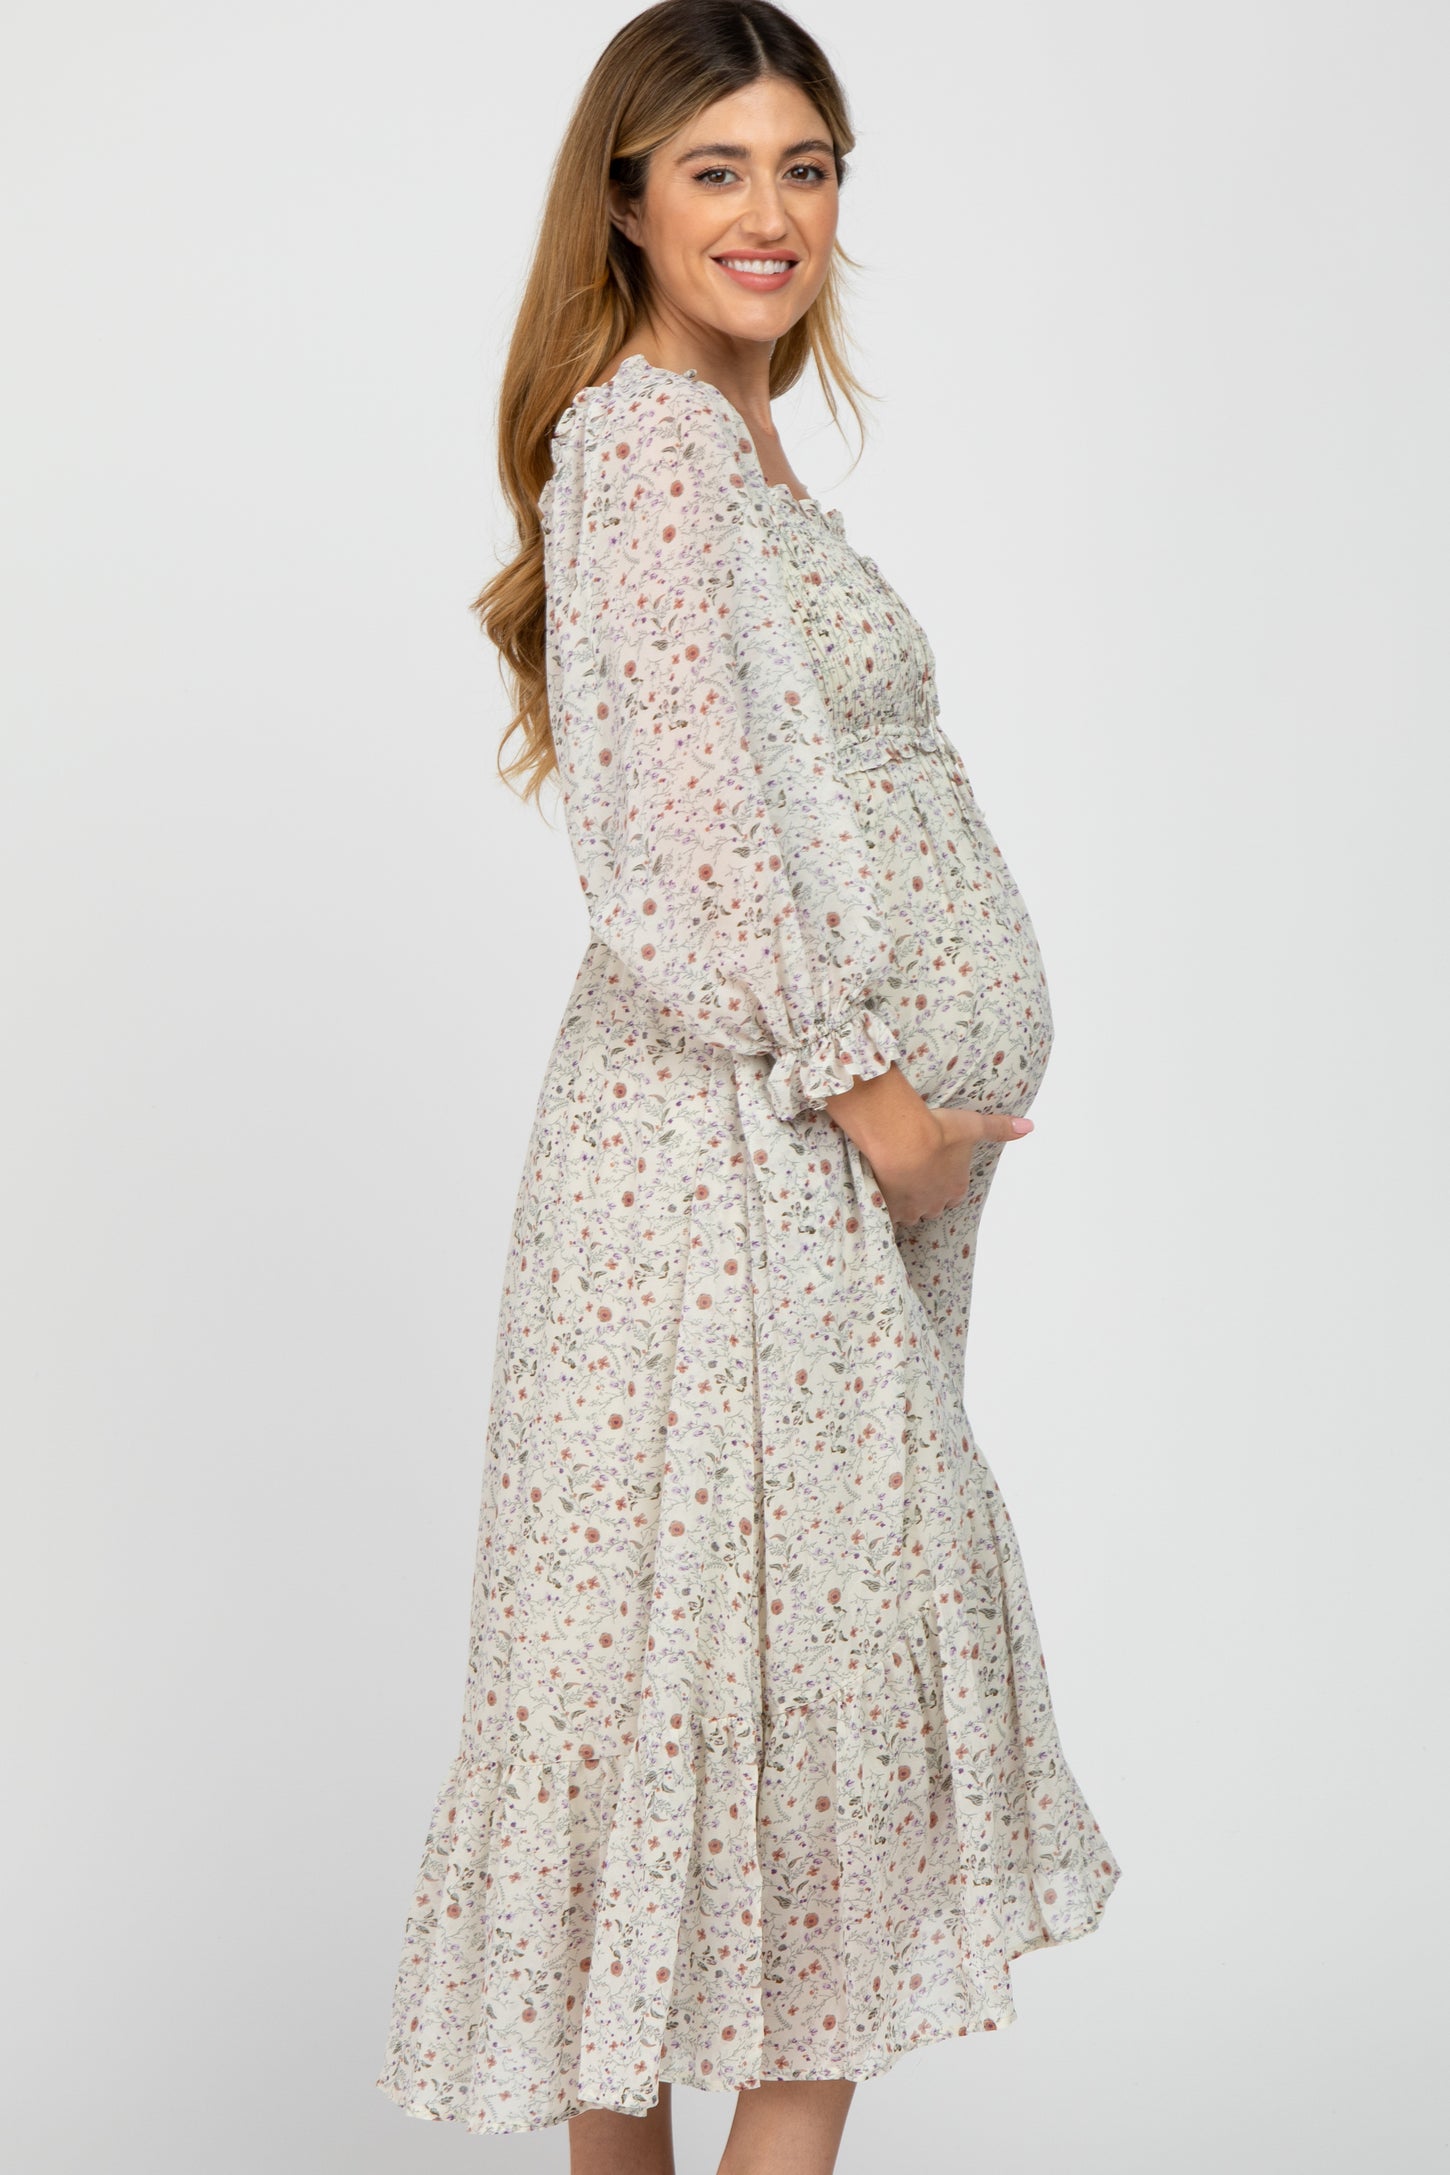 Ivory Floral Smocked 3/4 Sleeve Maternity Dress– PinkBlush